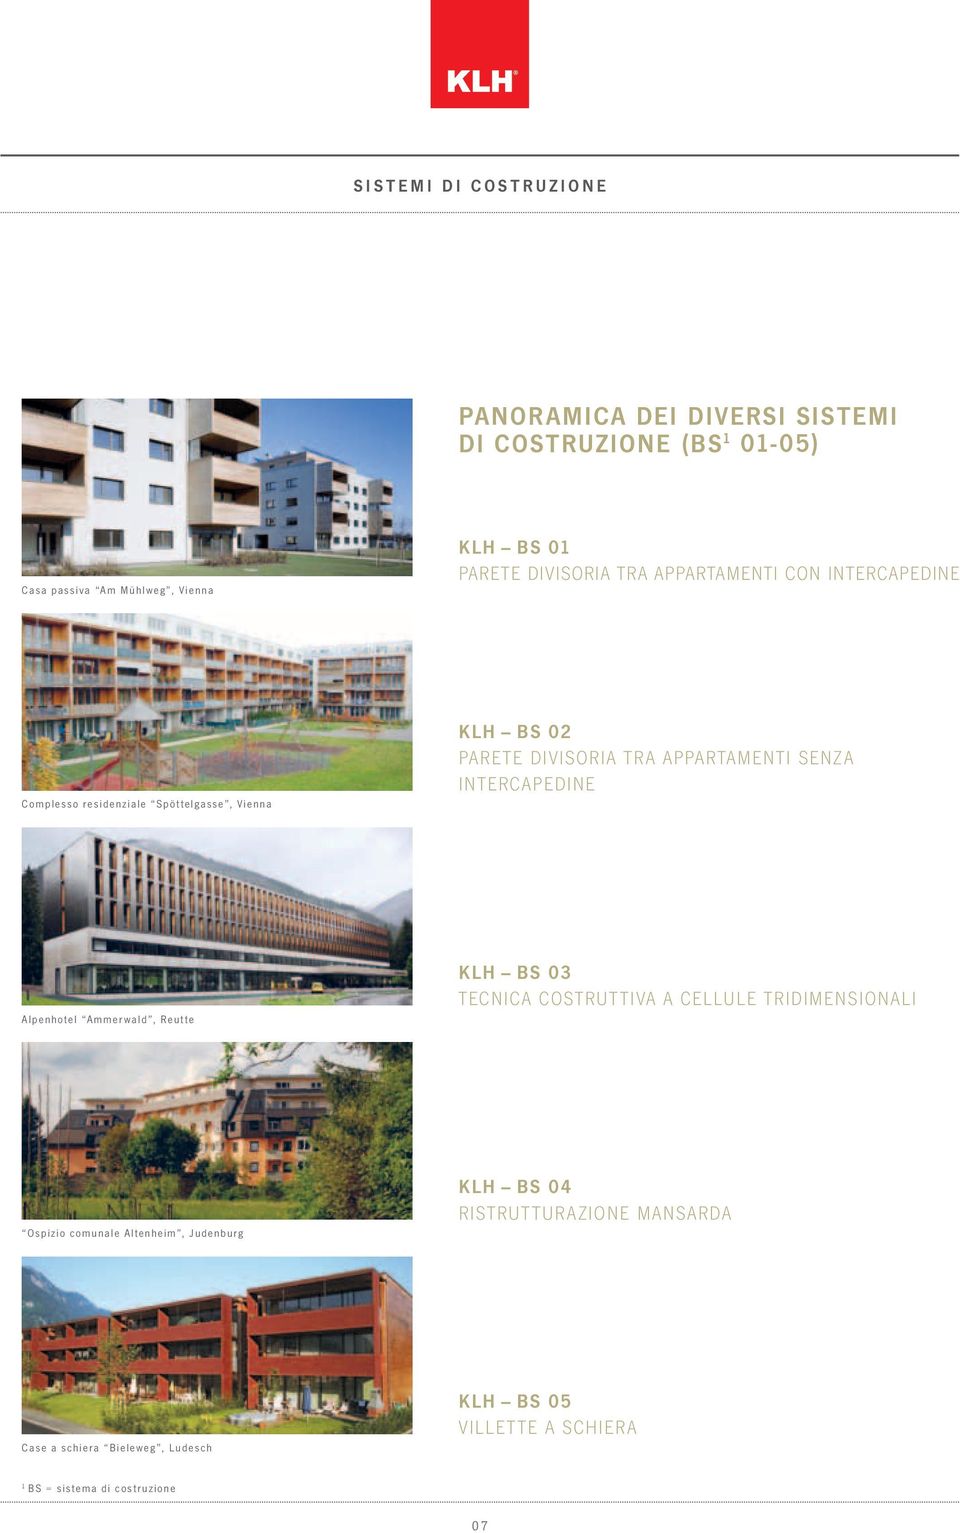 appartamenti senza intercapedine Alpenhotel Ammerwald, Reutte klh BS 0 Tecnica costrut tiva a cellule tridimensionali Ospizio comunale